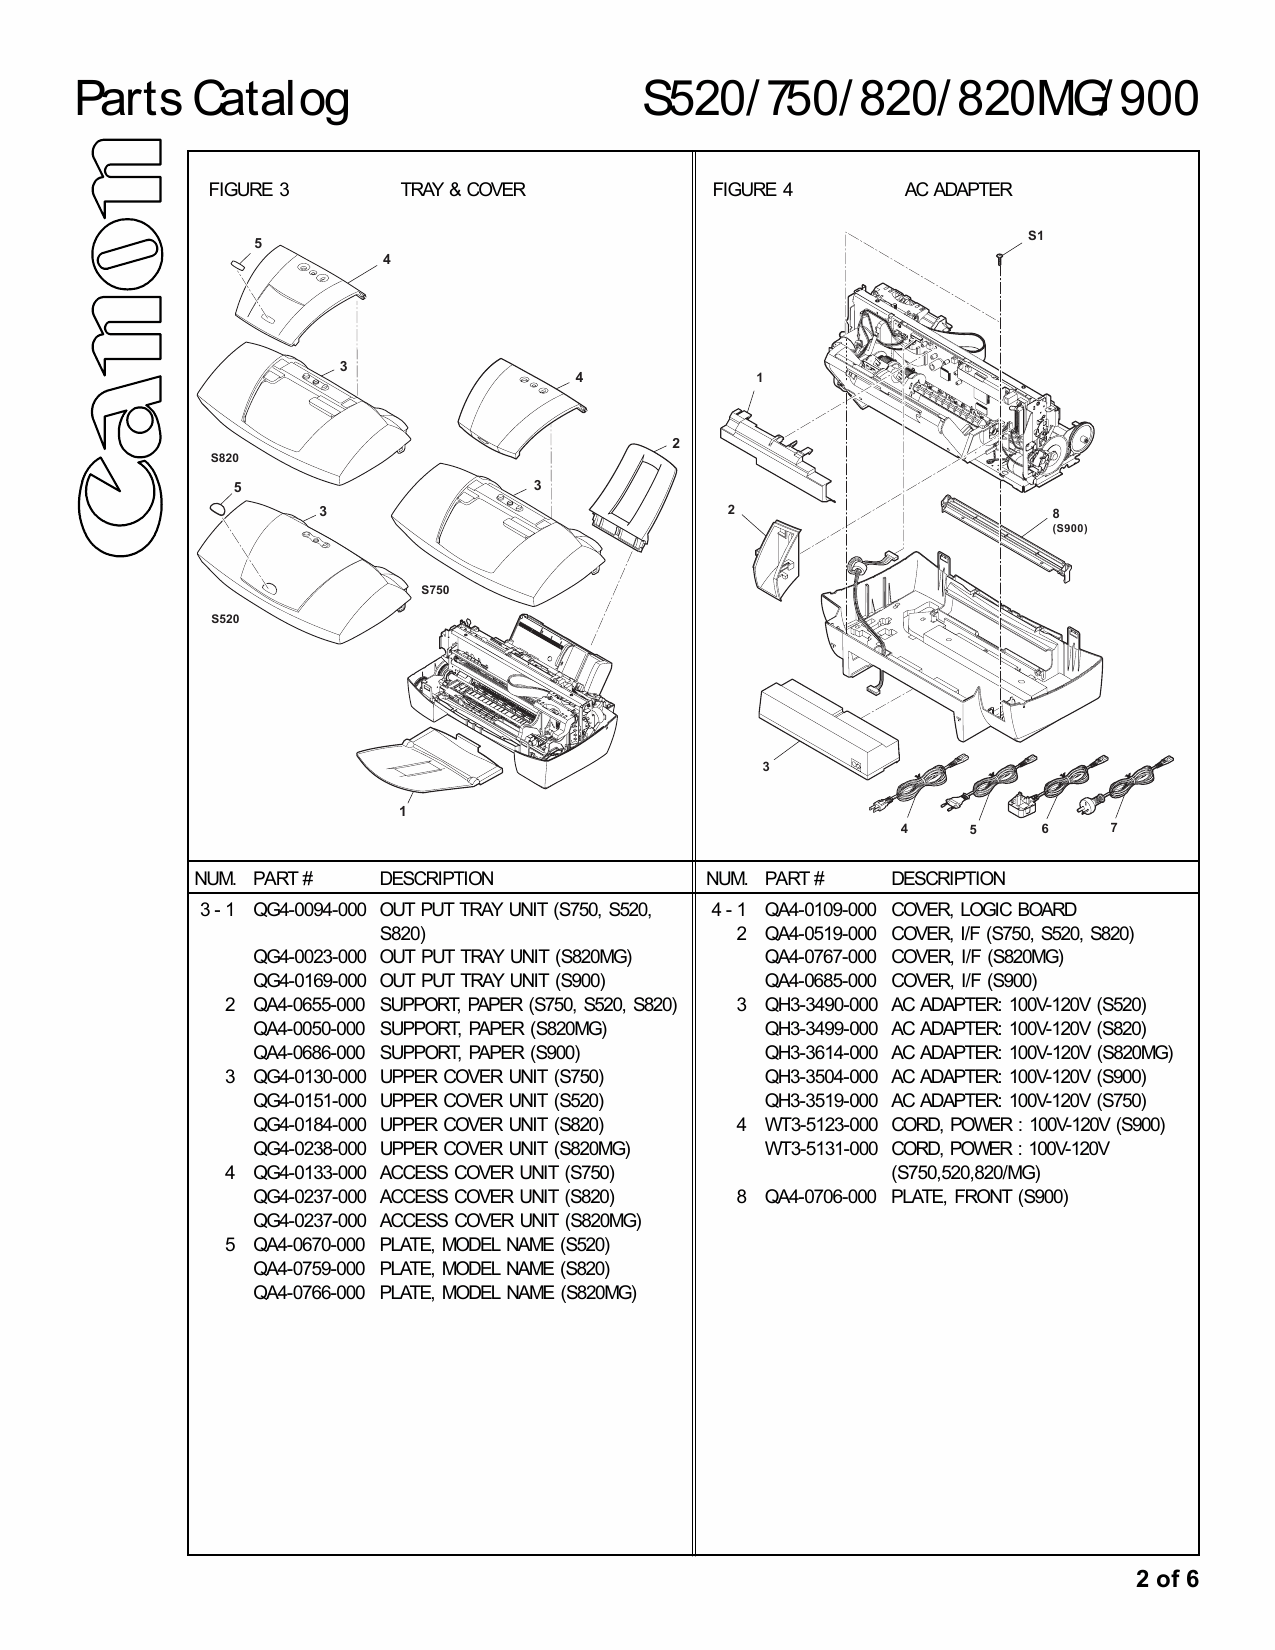 Canon PIXUS S520 S750 S820 S820MG S900 Parts Catalog Manual-3